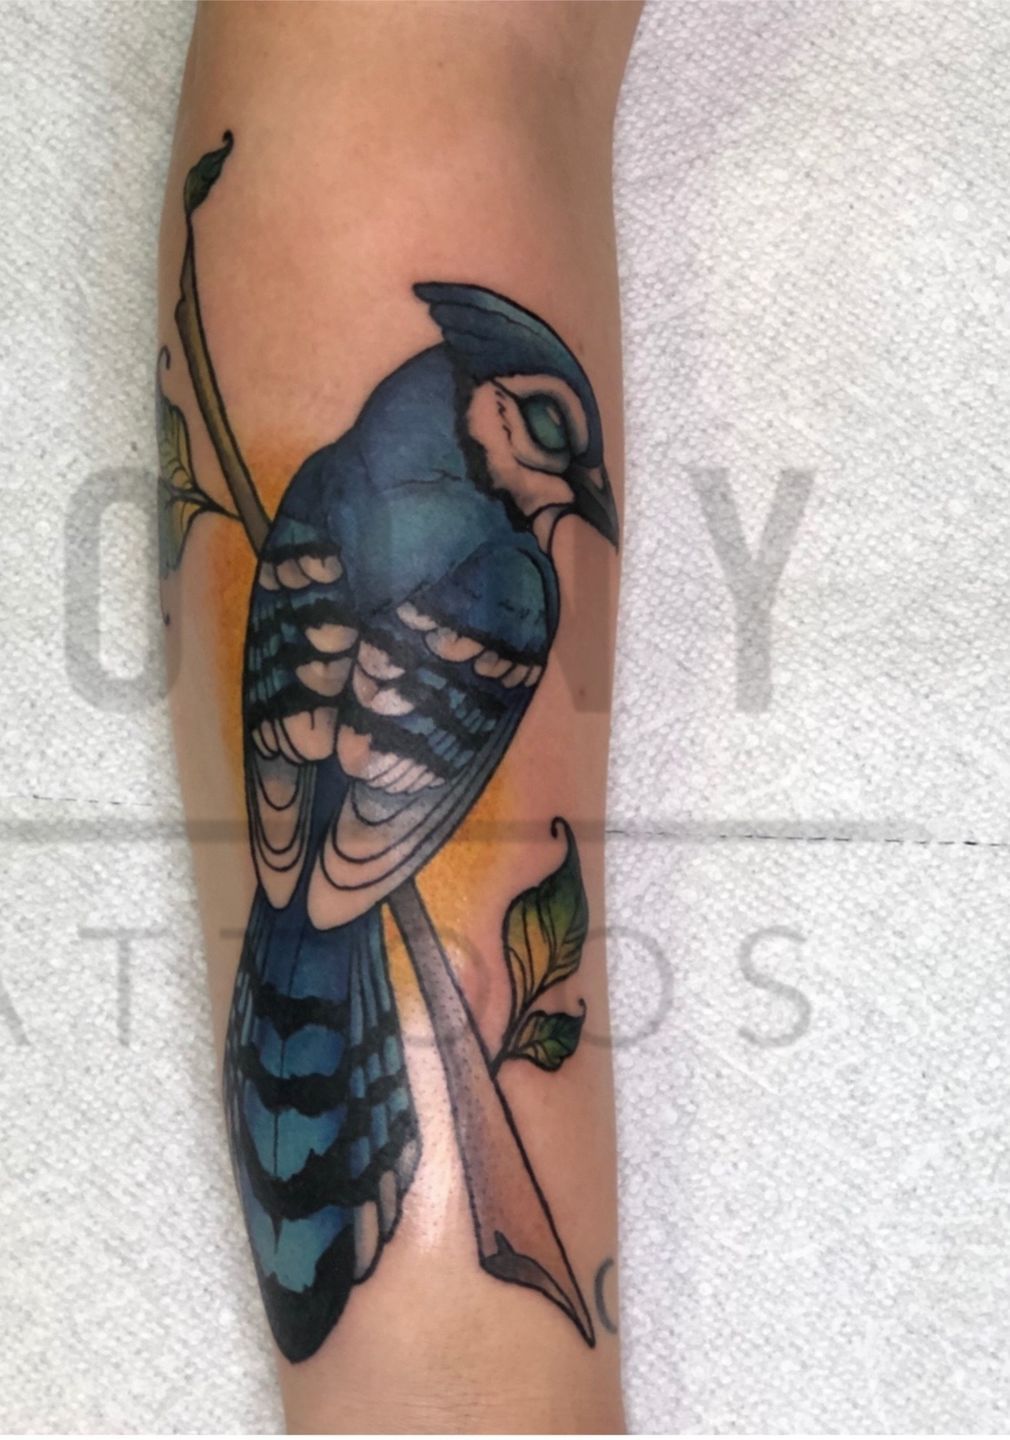 Latest Blue Jay Tattoos Find Blue Jay Tattoos